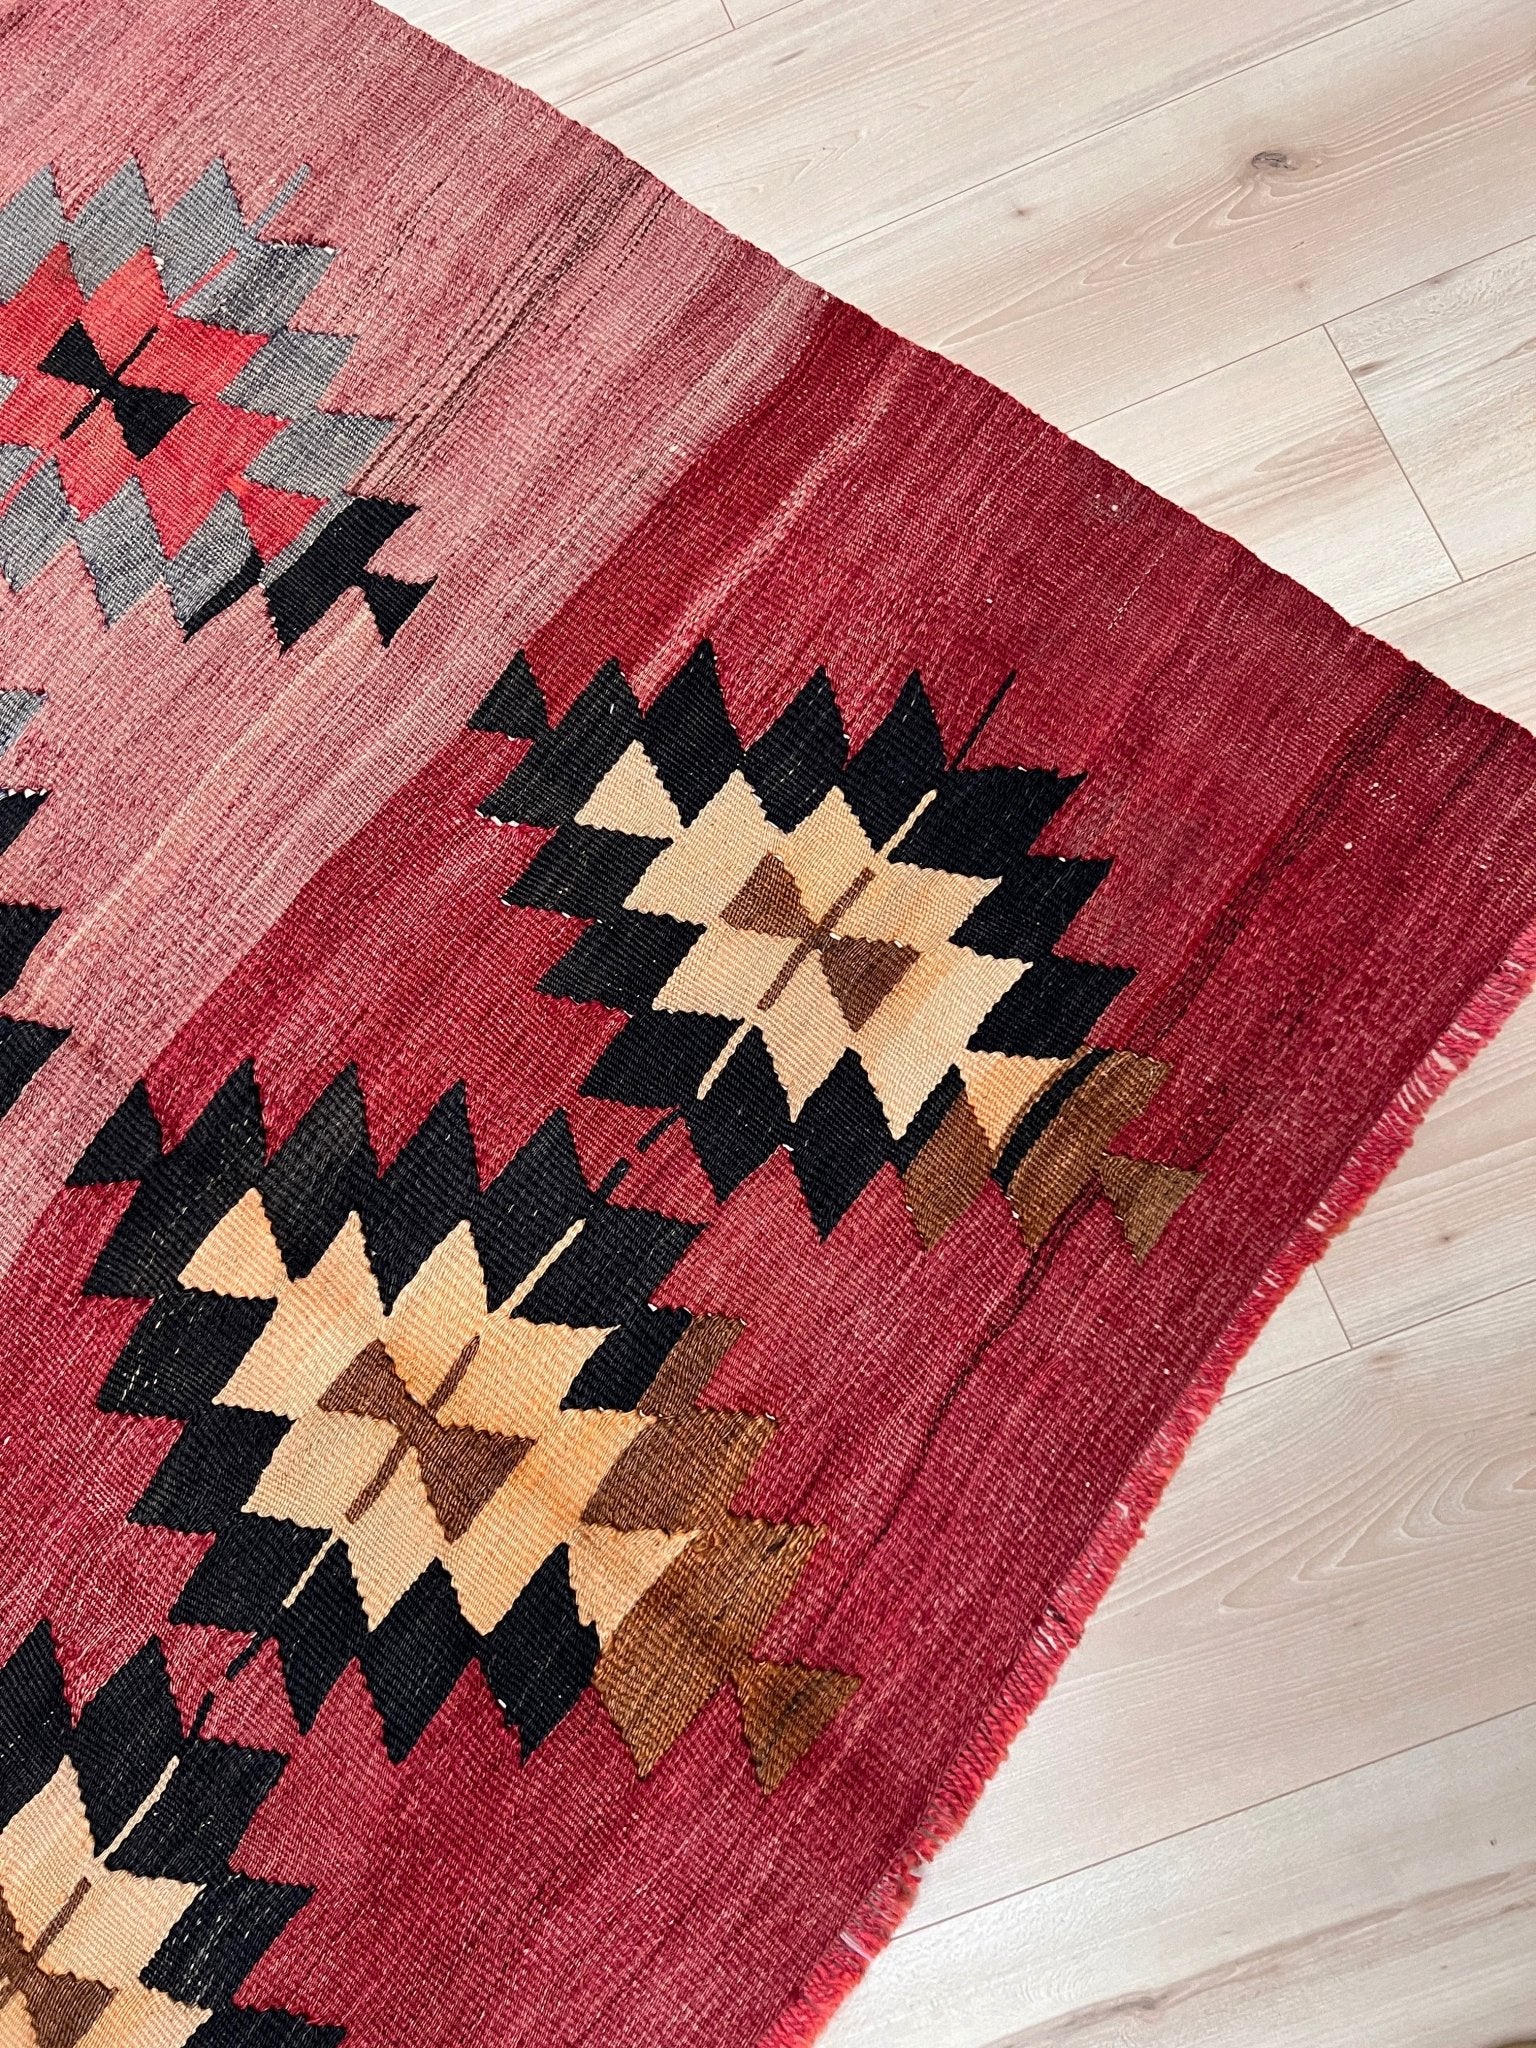 pergamum Vintage turkish kilim rug shop San francisco bay area. Navajo style rug. Buy turkish rug online